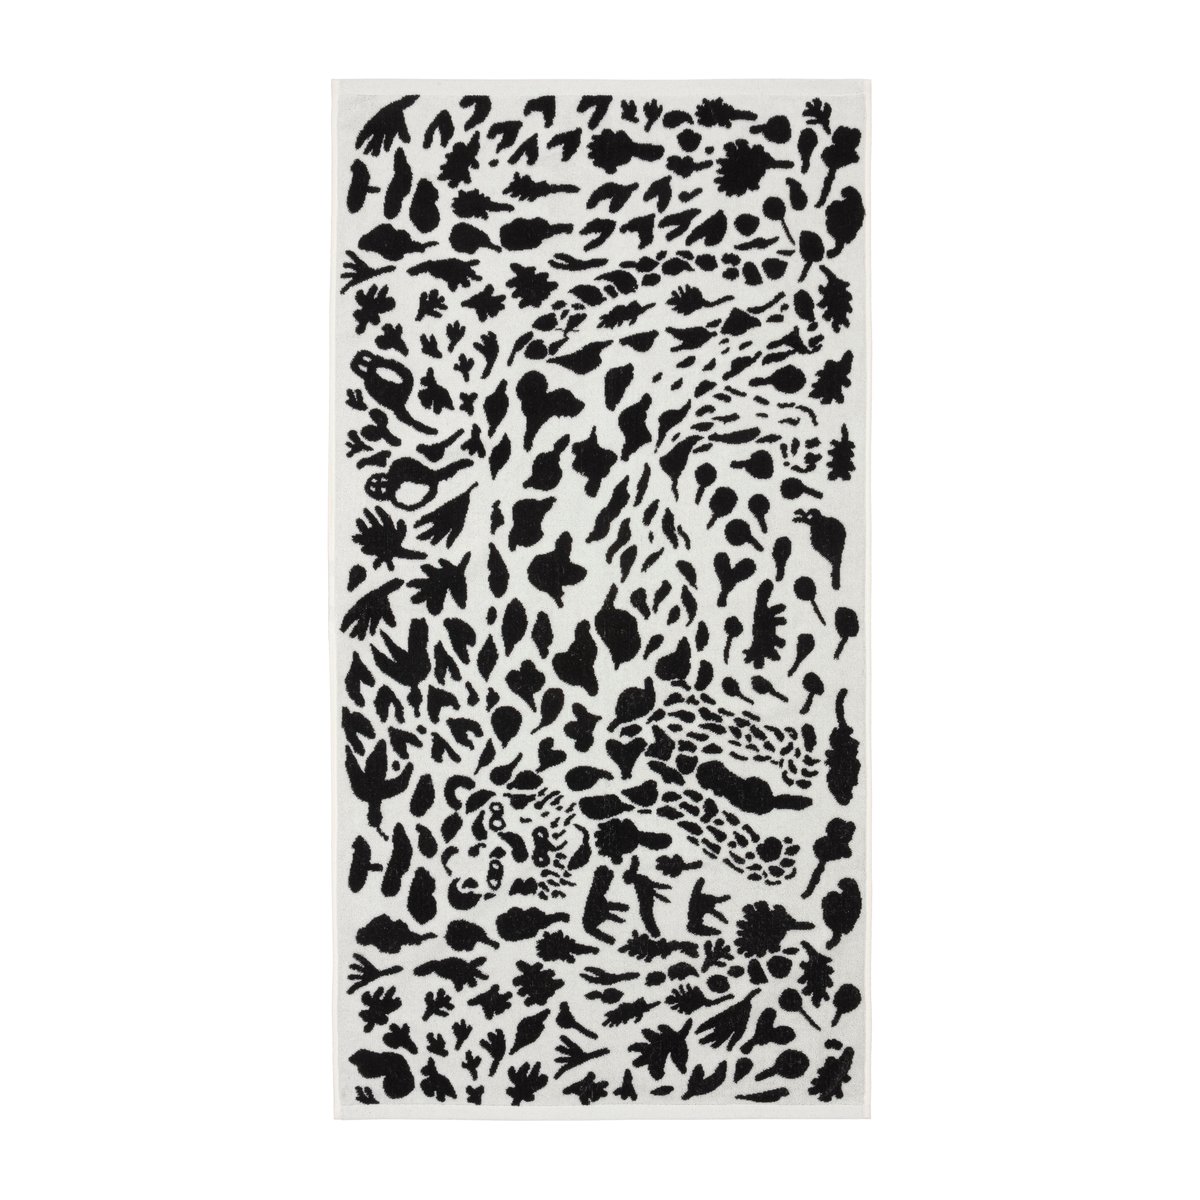 Bilde av Iittala Oiva Toikka Cheetah badehåndkle 70 x 140 cm Svart-hvit